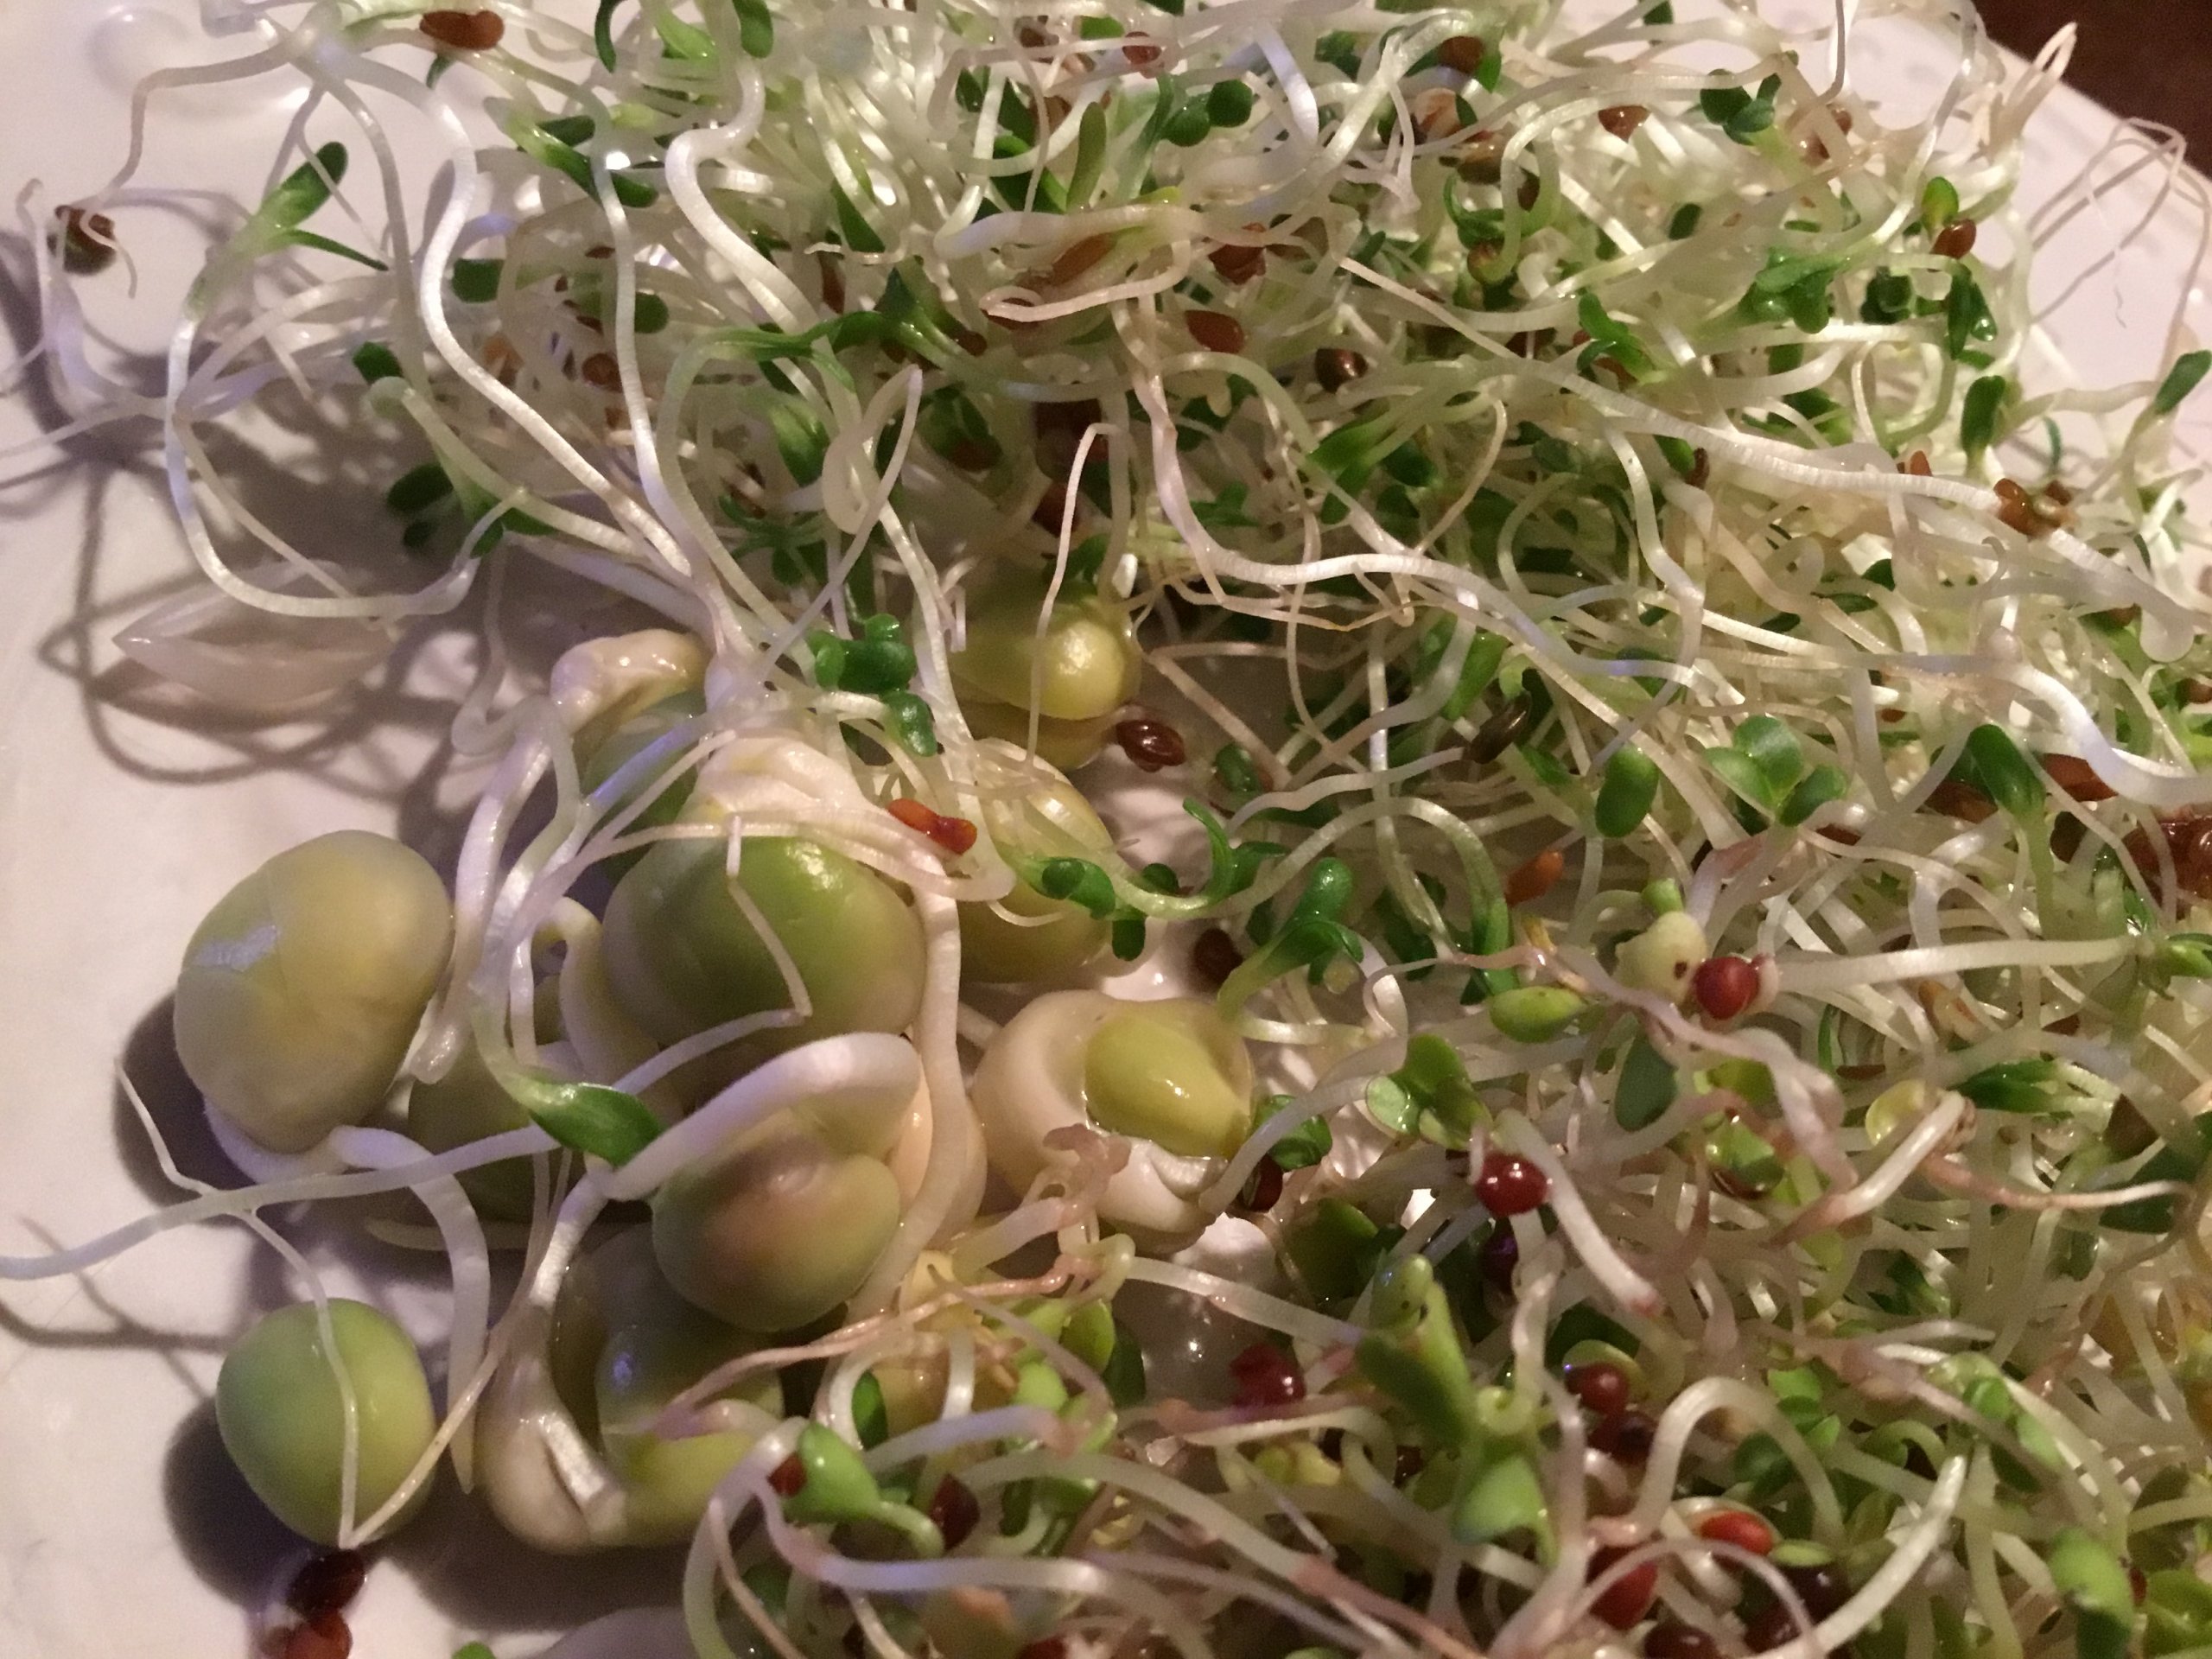 Sprouts! Pea, broccoli, and alfalfa. So beautiful...